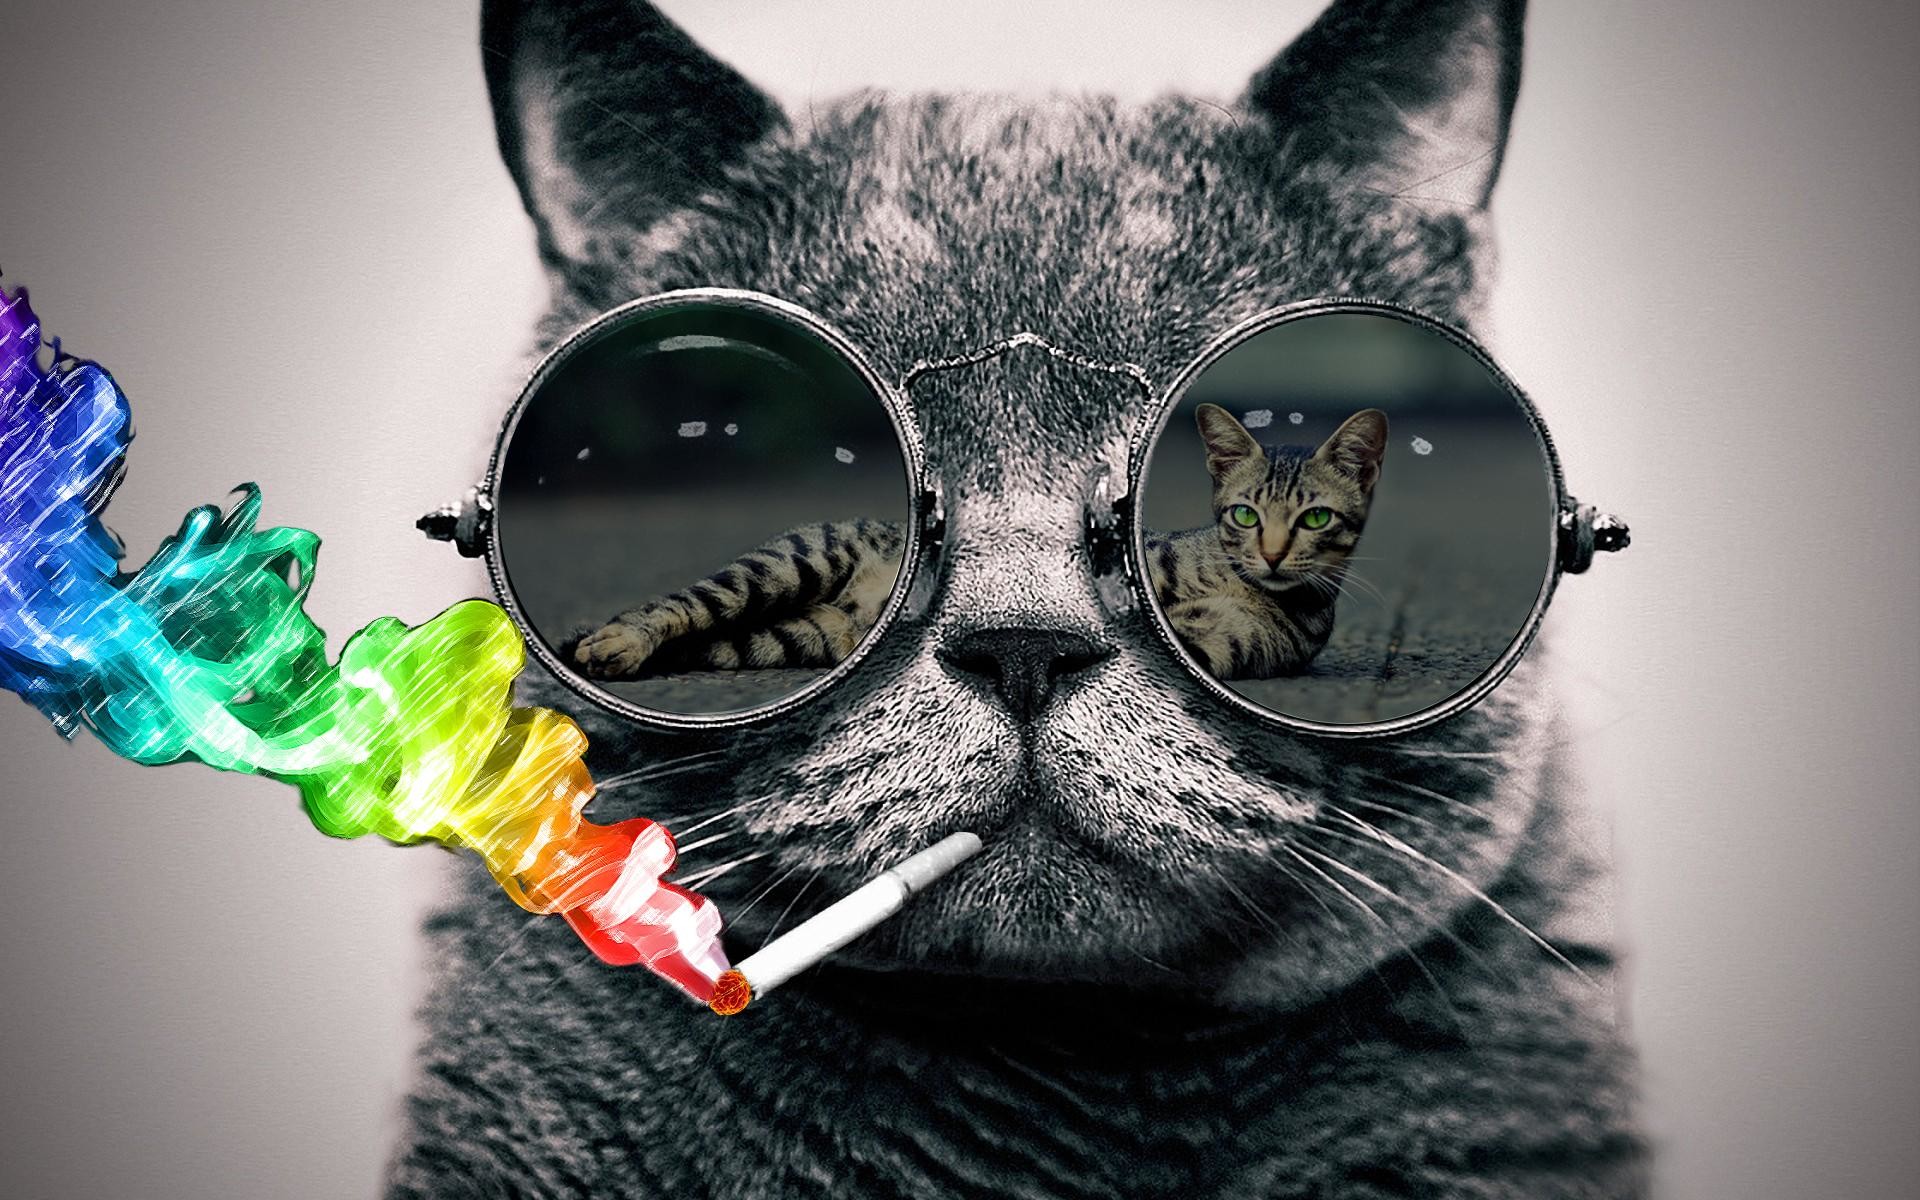 1920x1200 Cat with sunglasses wallpaper (Photoshop) - rank them please